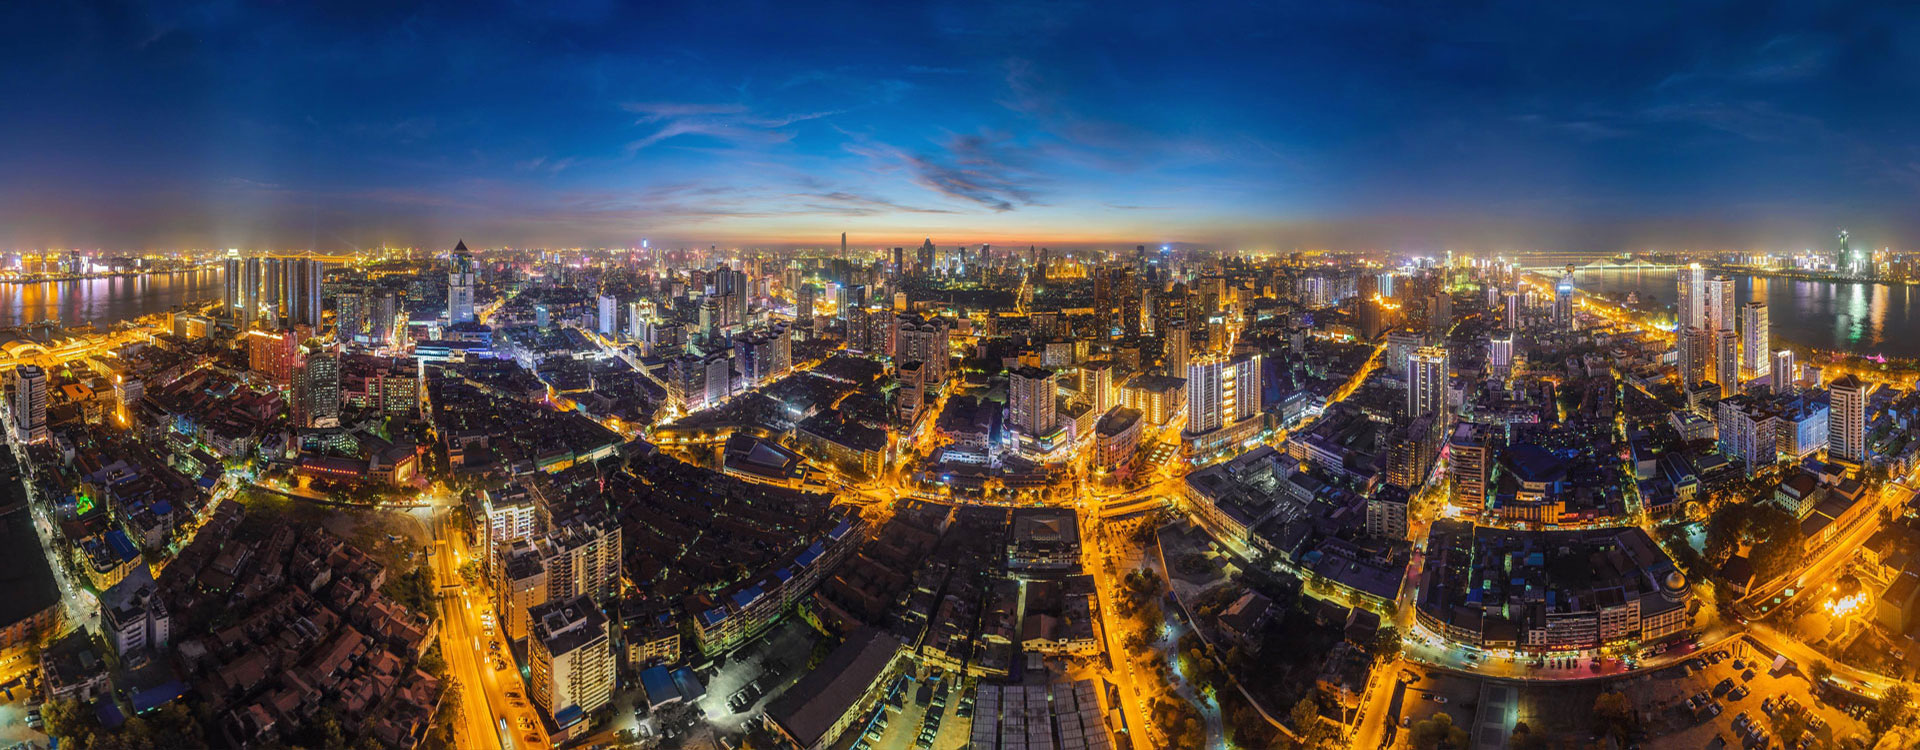 Wuhan Zhongshan Avenue District revitalization plan won the highest international award